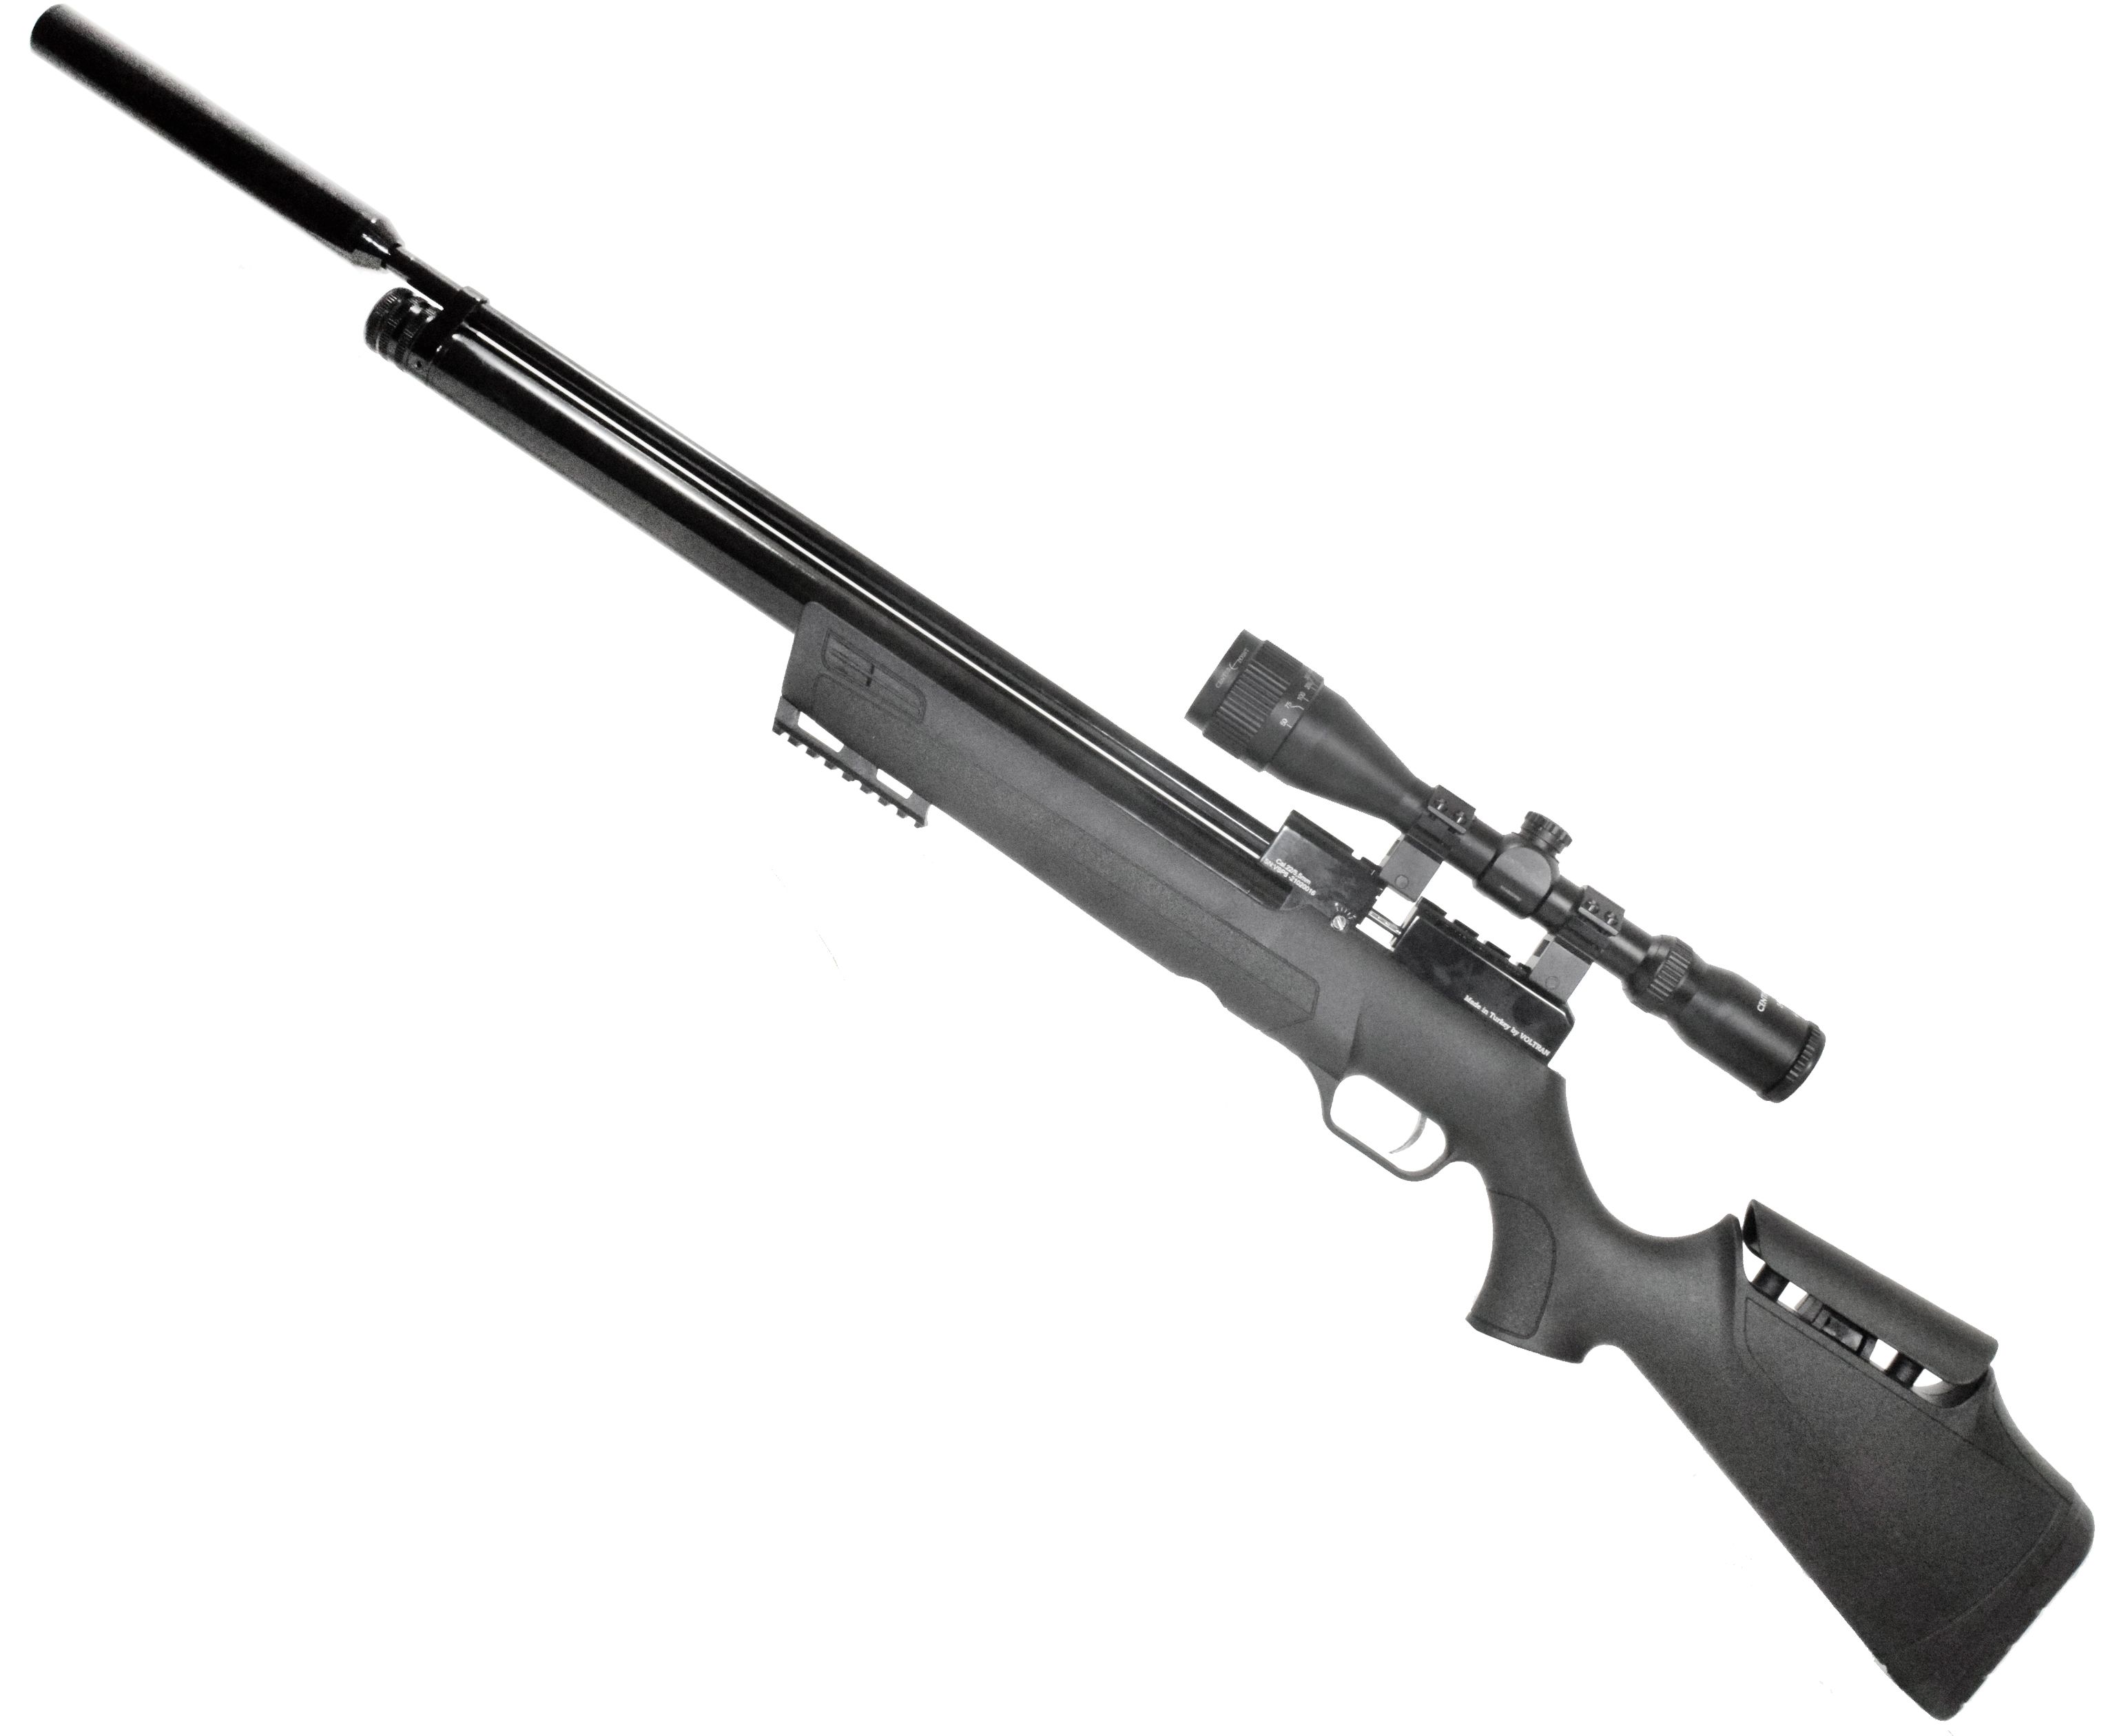 Pcp 5 5 мм. Kral Puncher Maxi 3s PCP. ZR Arms pp700s-a PCP, 5.5 мм. Ekol винтовки. Пневматические винтовки Ekol ml es красивое фото.